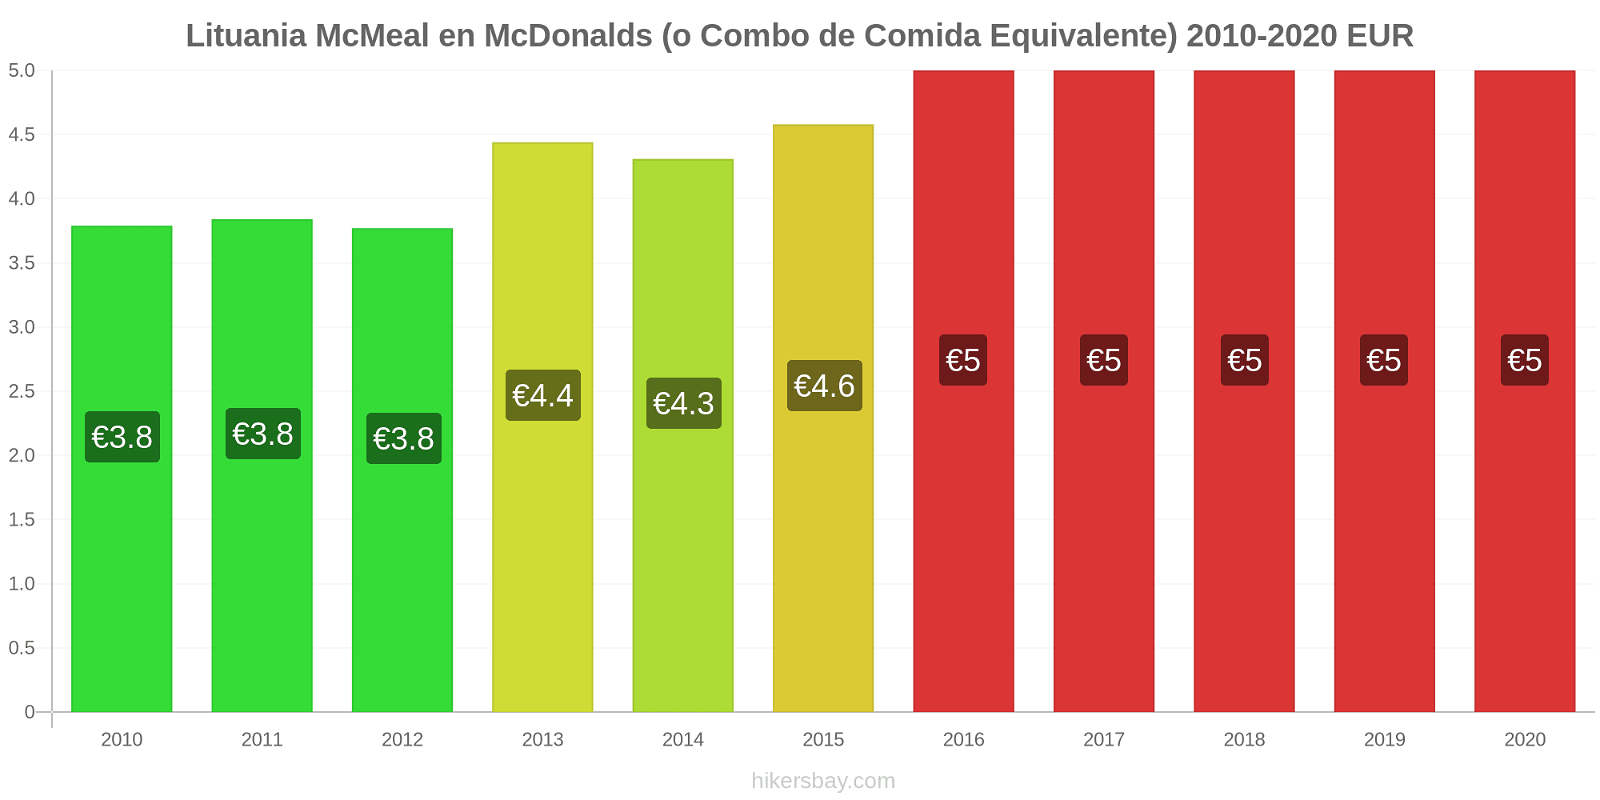 Lituania cambios de precios McMeal en McDonalds (o menú equivalente) hikersbay.com